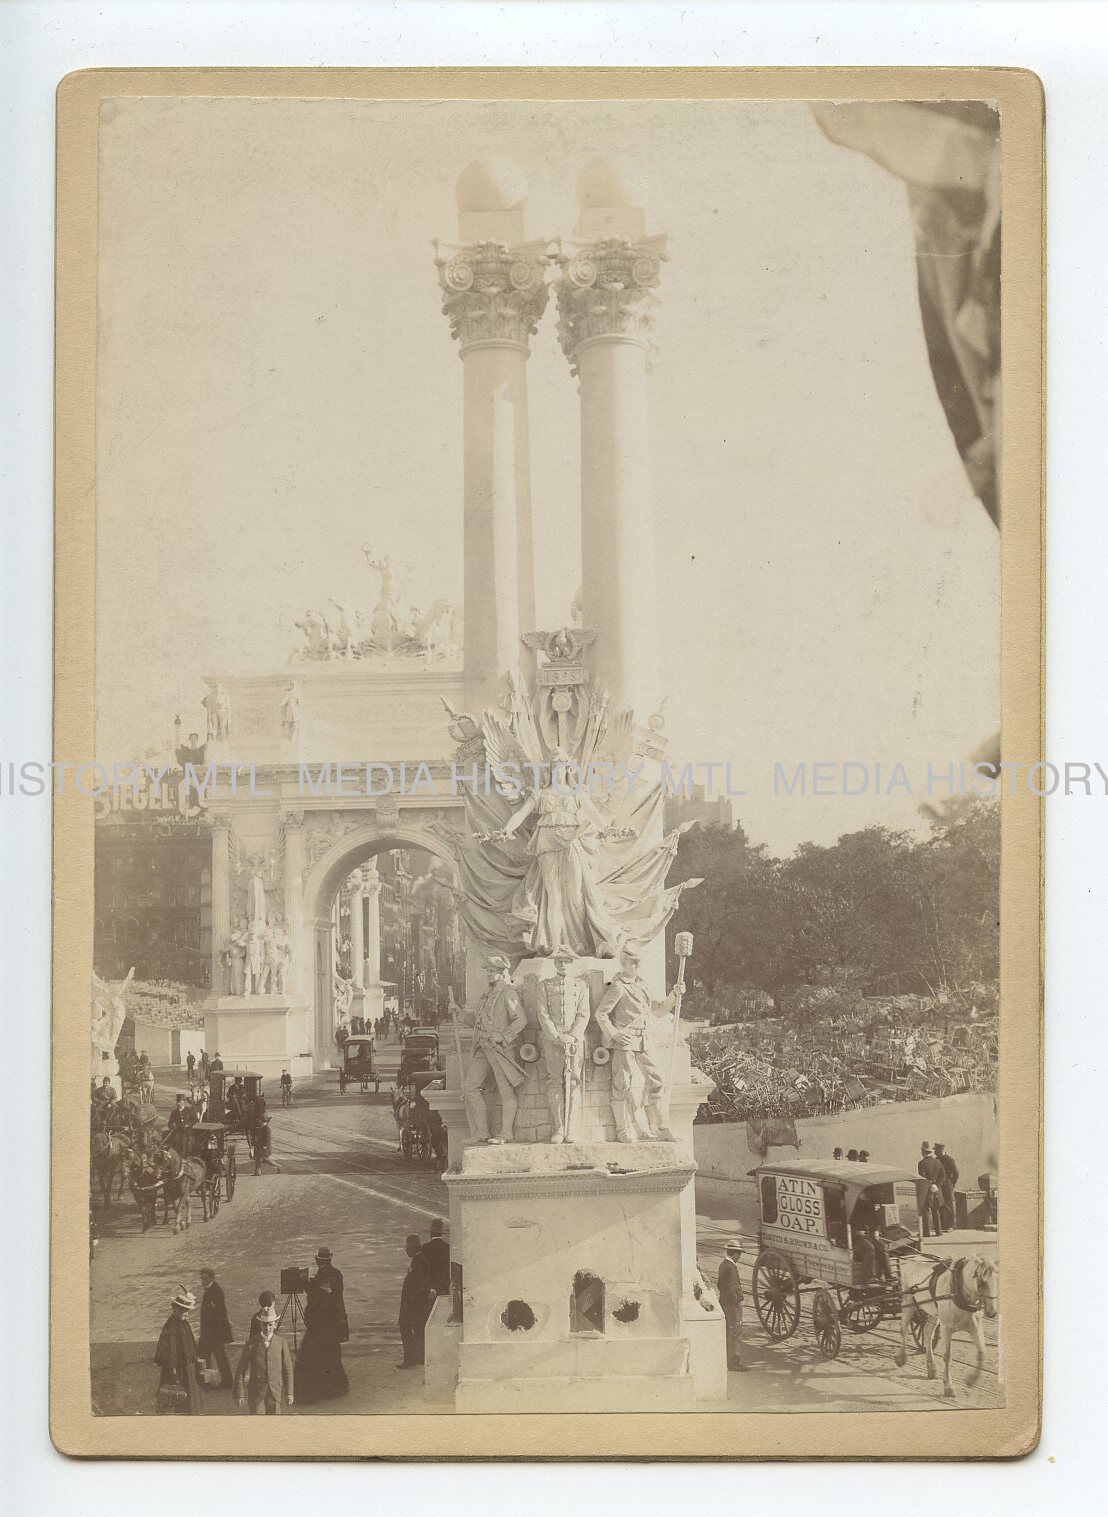 Vintage Photograph, New York City, Dewey Arch, Madison, South American War, 1898